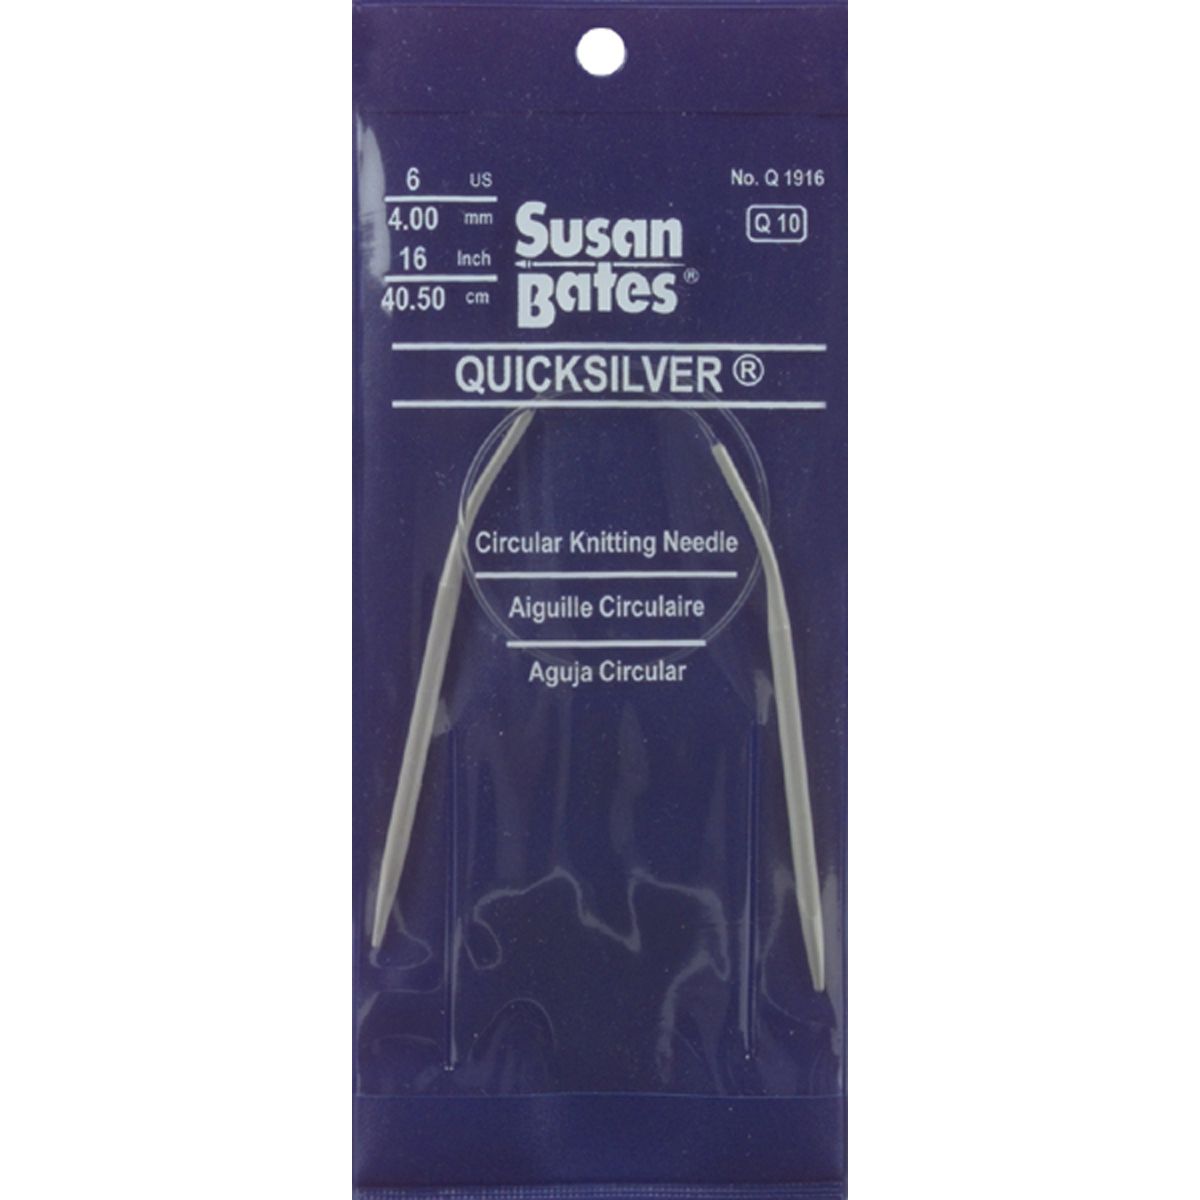 Susan Bates Quicksilver Circular Knitting Needle 24" Size 11